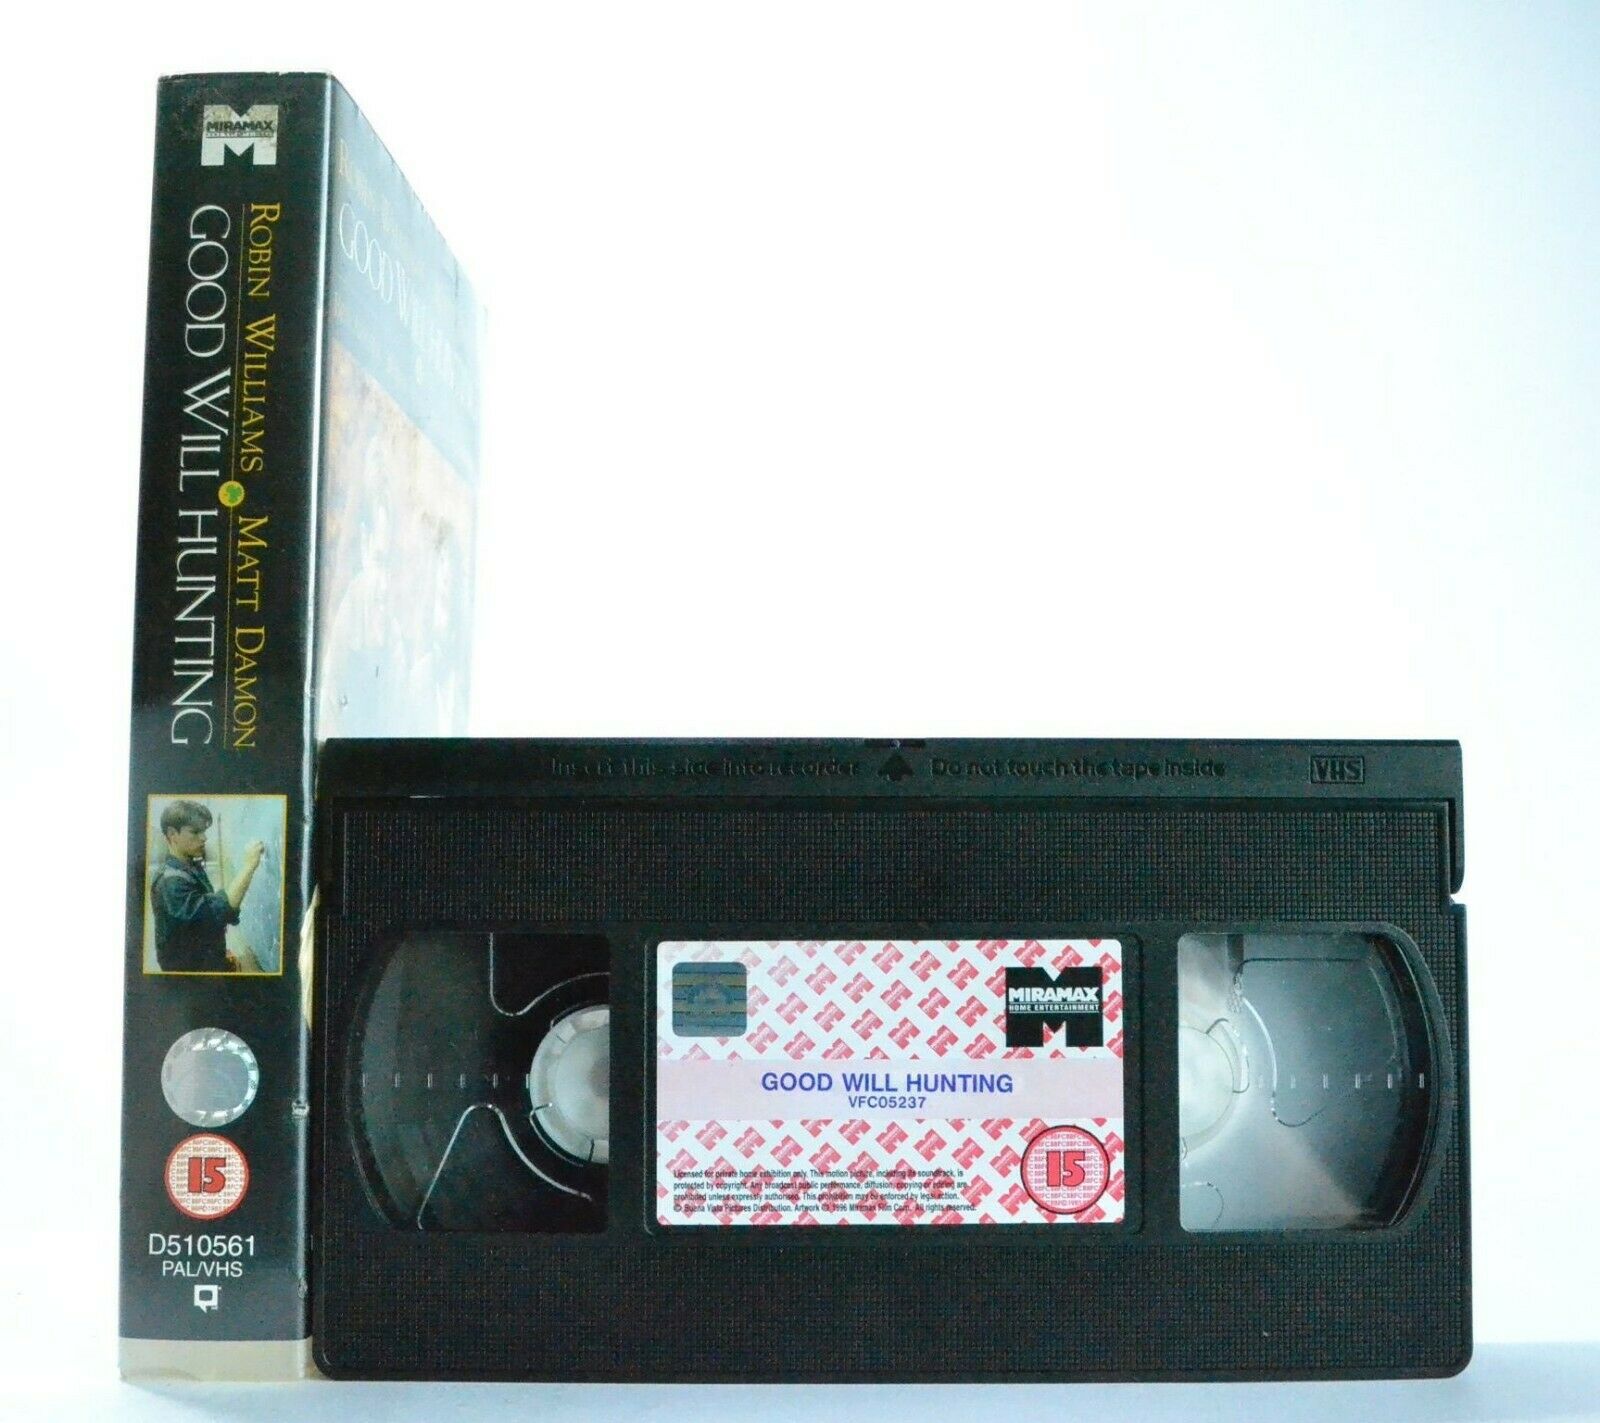 Good Will Hunting: (1997) Drama; Self Taught Genius - R.Williams/M.Damon - VHS-